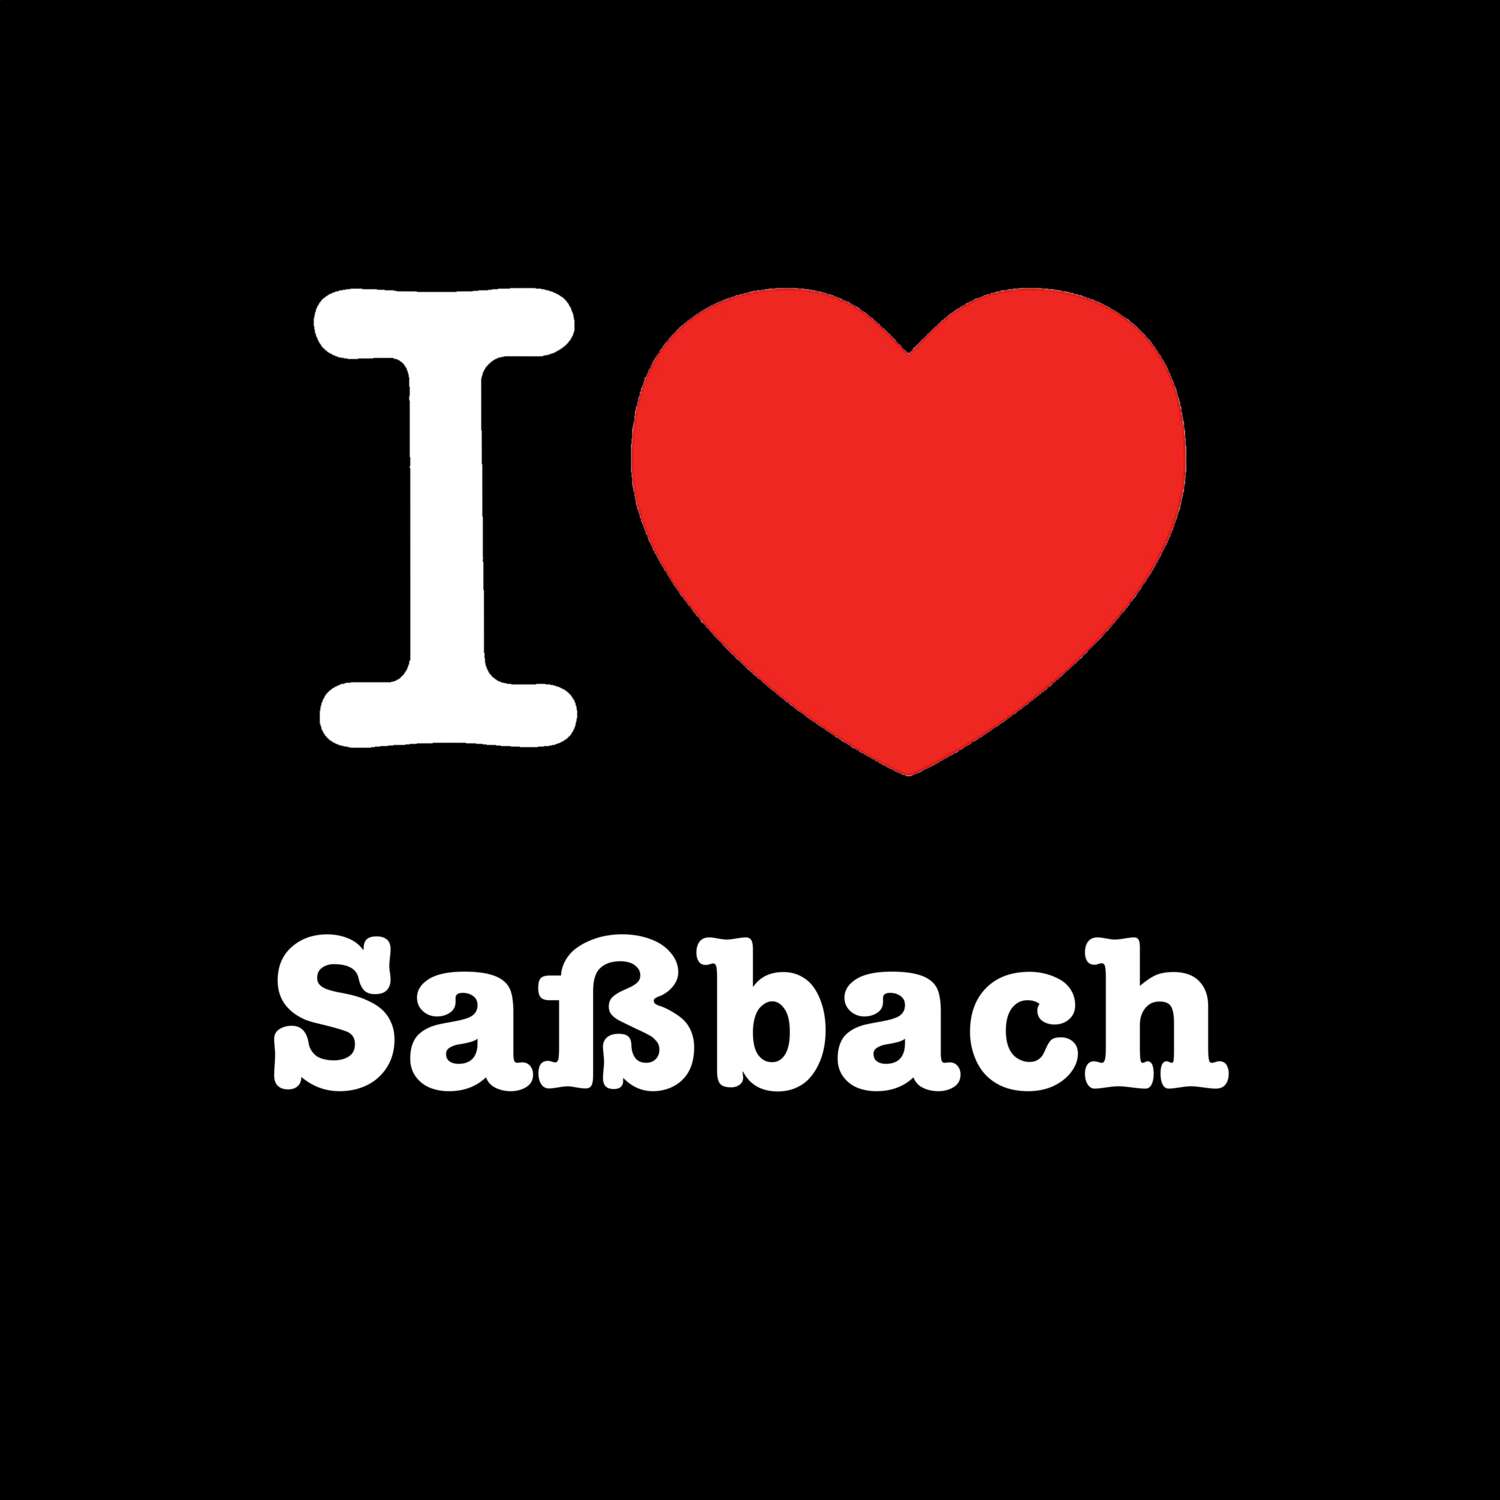 Saßbach T-Shirt »I love«